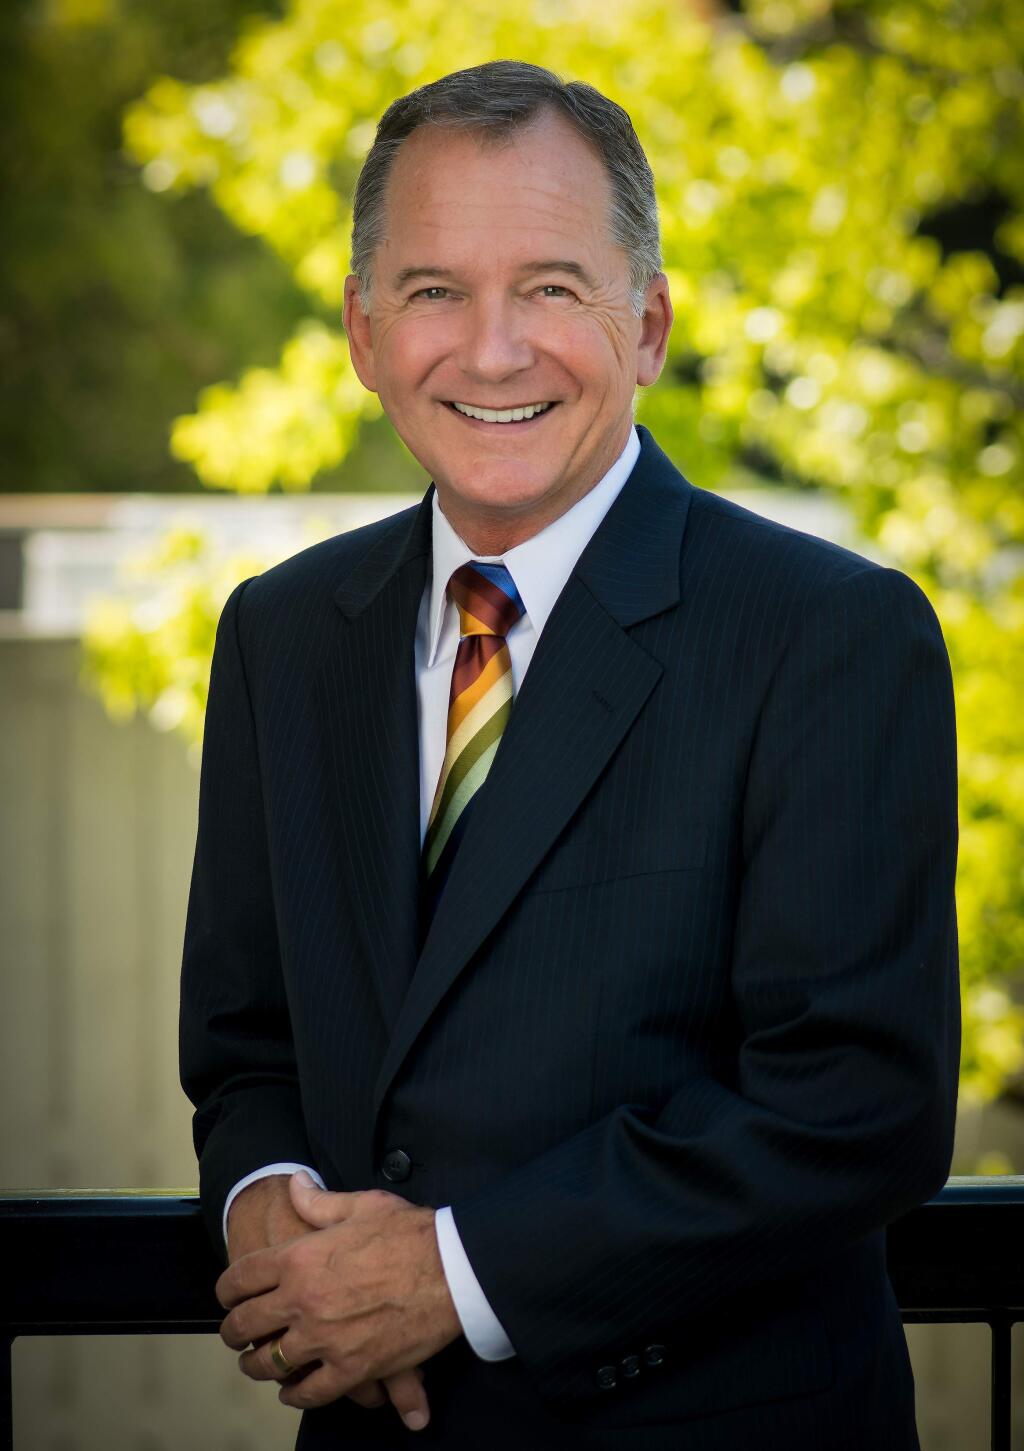 John Sawyer, Mayor of Santa Rosa